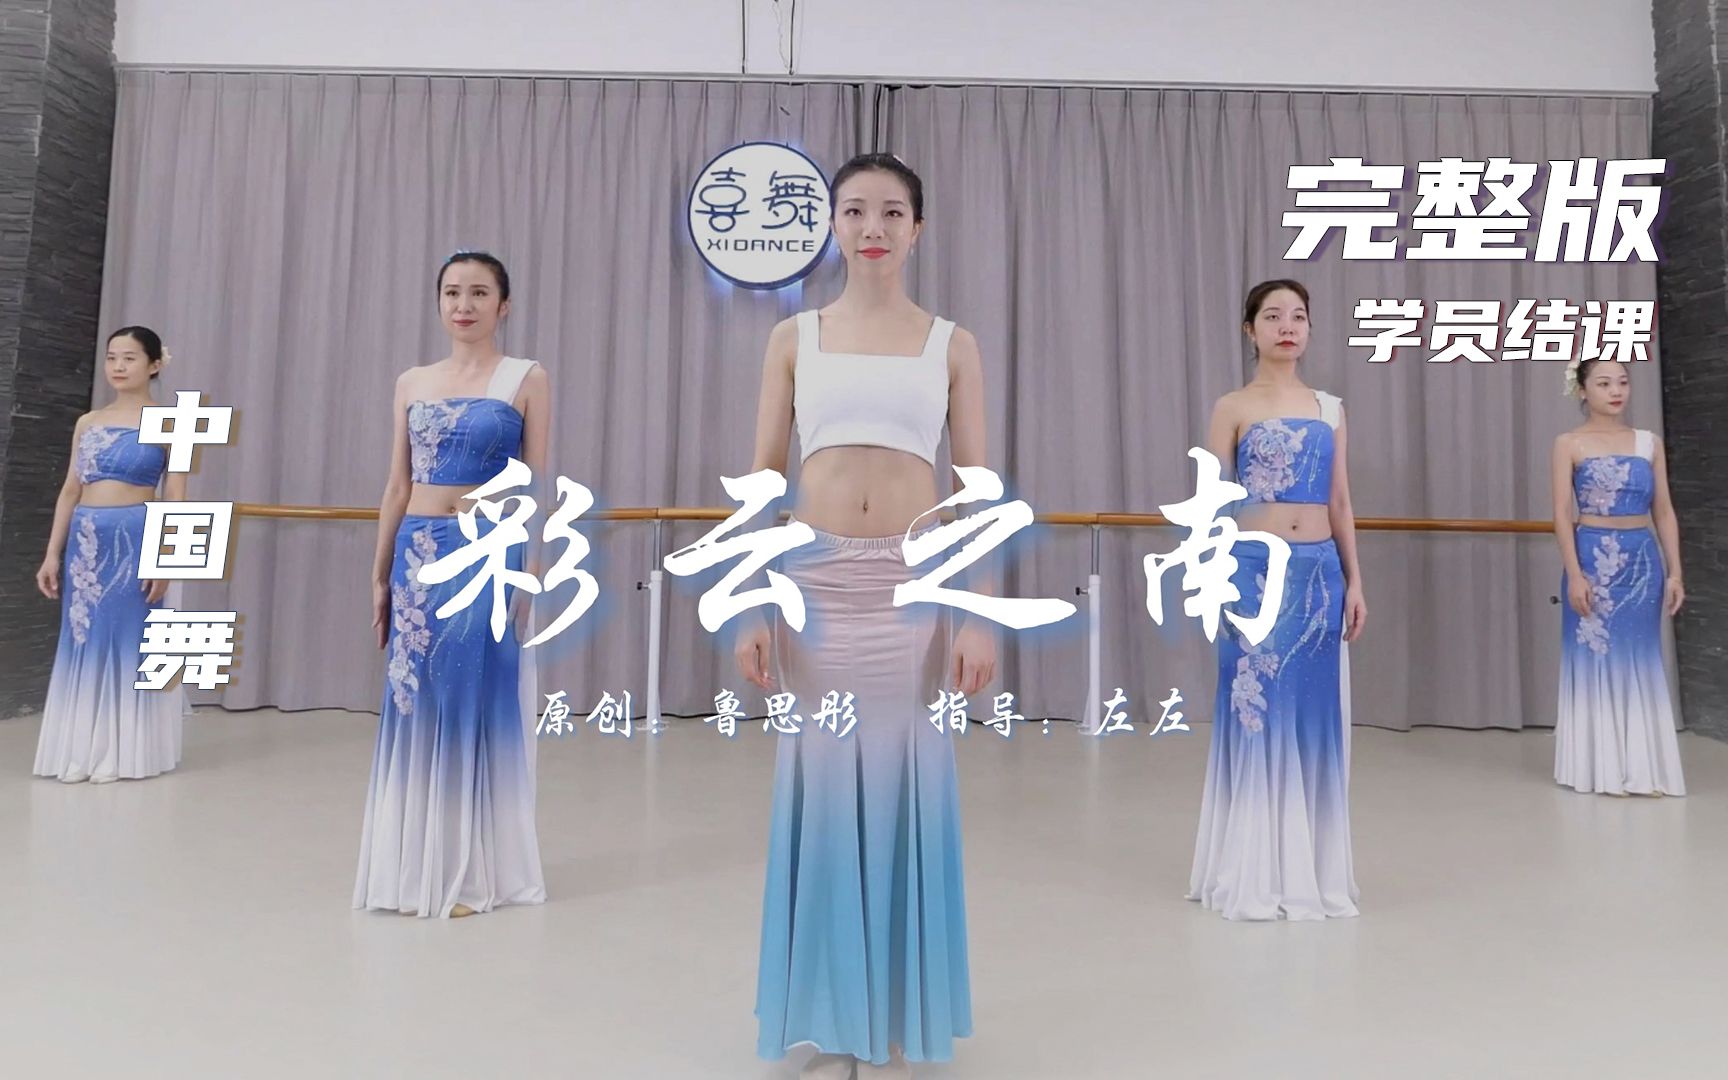 【XIDANCE喜舞·智能零舞】中国舞结课作品《彩云之南》